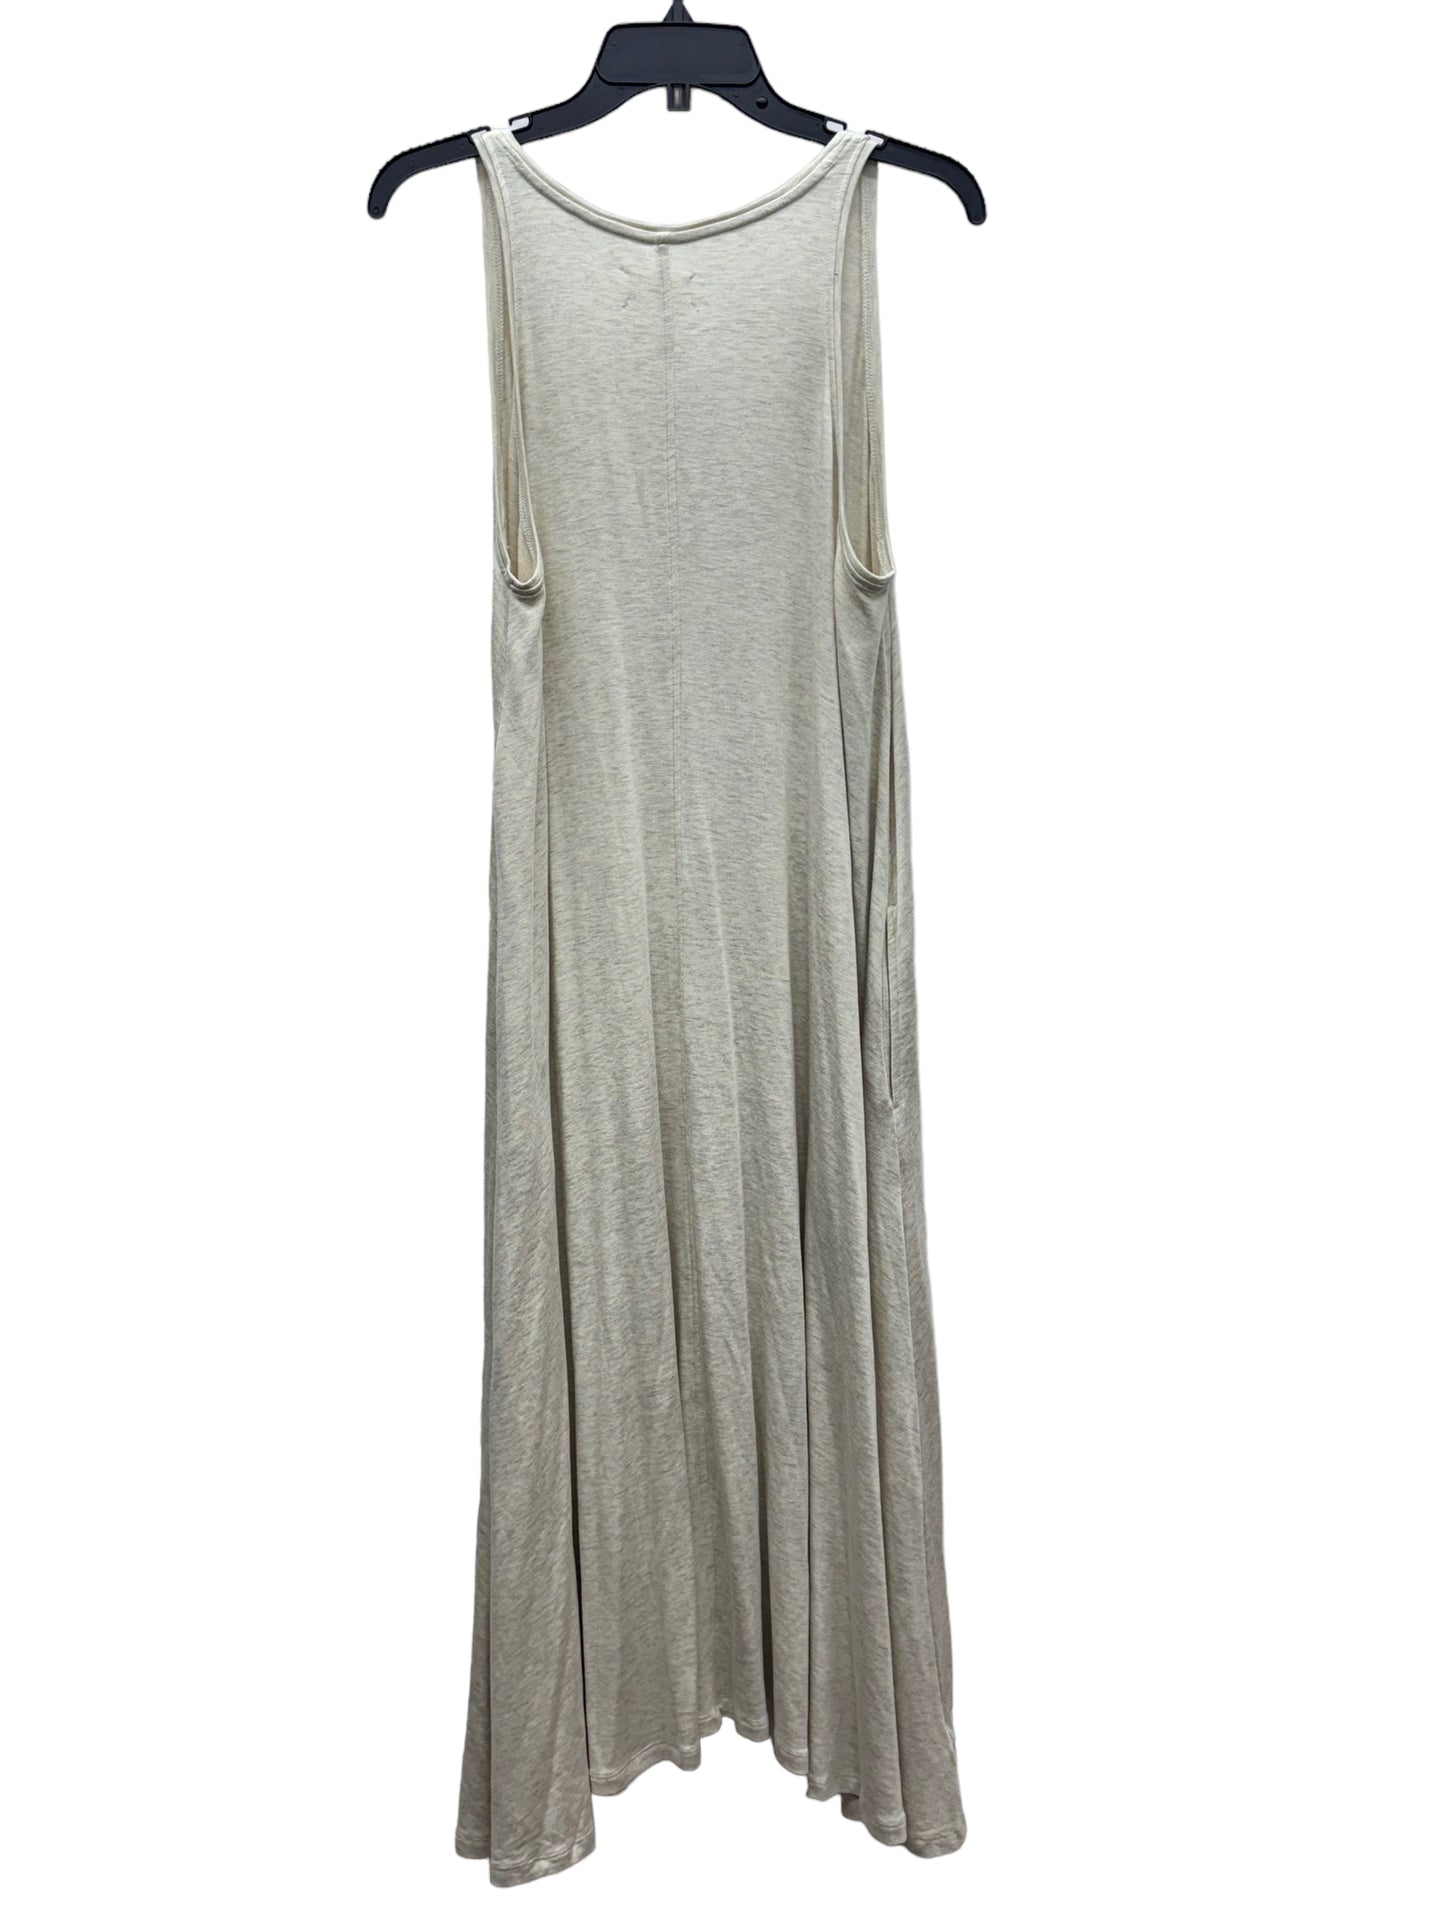 Lou & Grey Women's Sleeveless Long Maxi Dress Super Soft Cream - Size Large